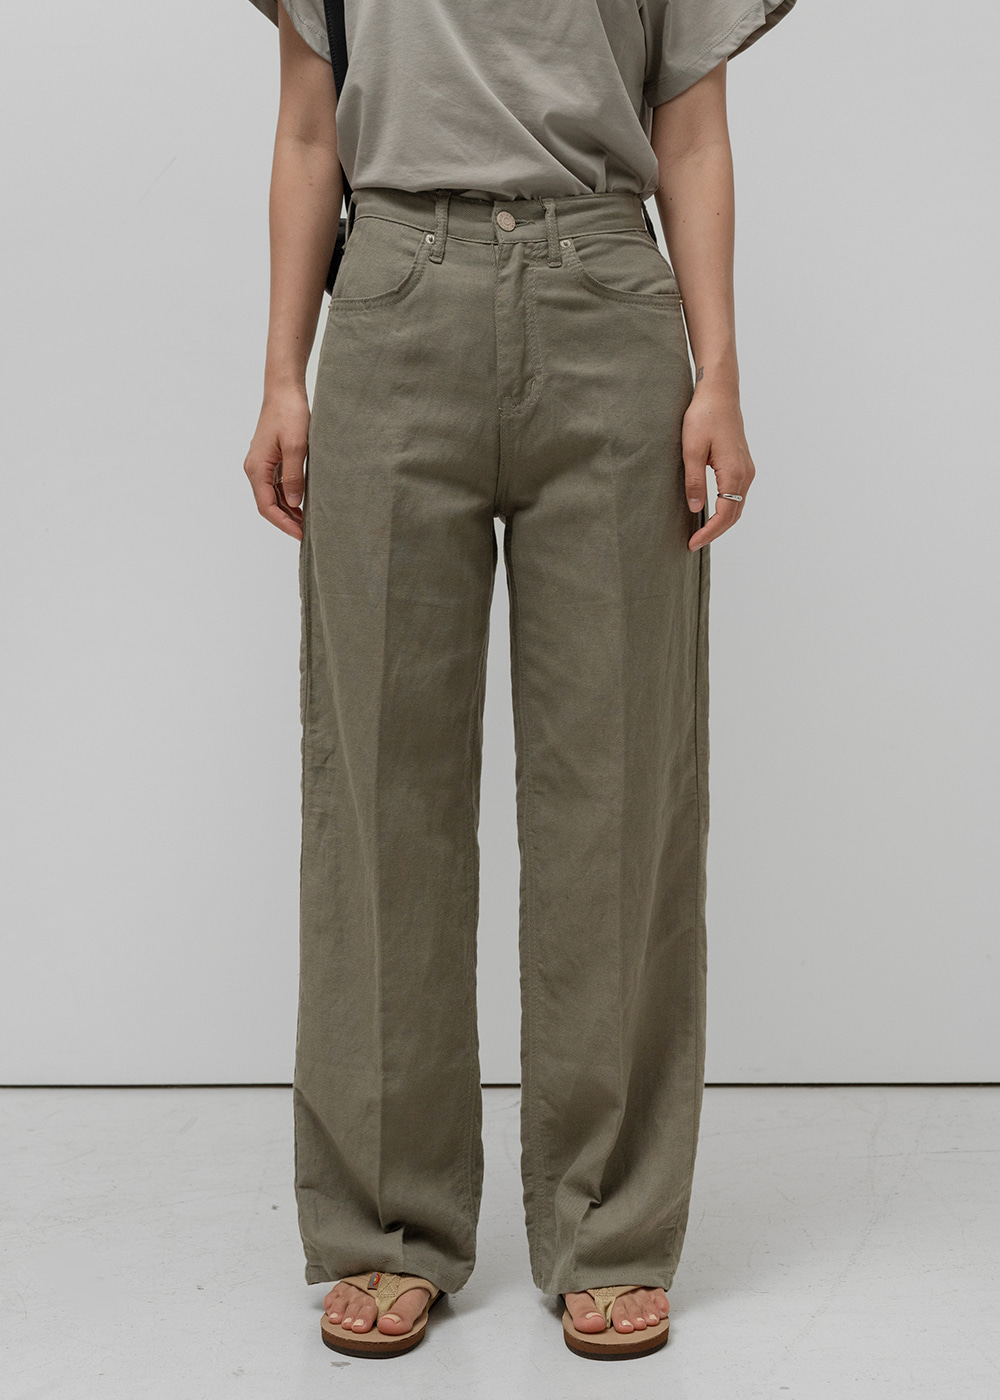 [WASHINGROOM] Khaki linen pants (M,L)